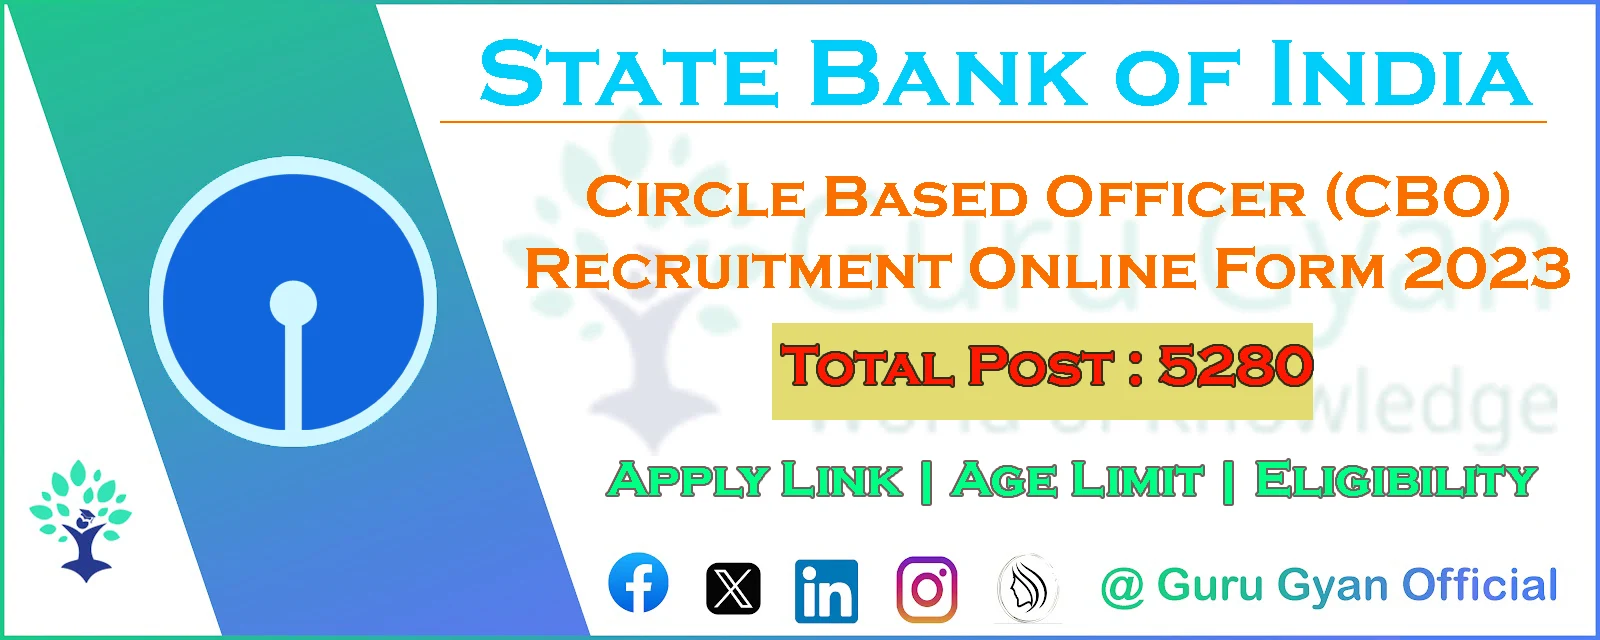 SBI Circle Based Officer (CBO) Online Form 2023